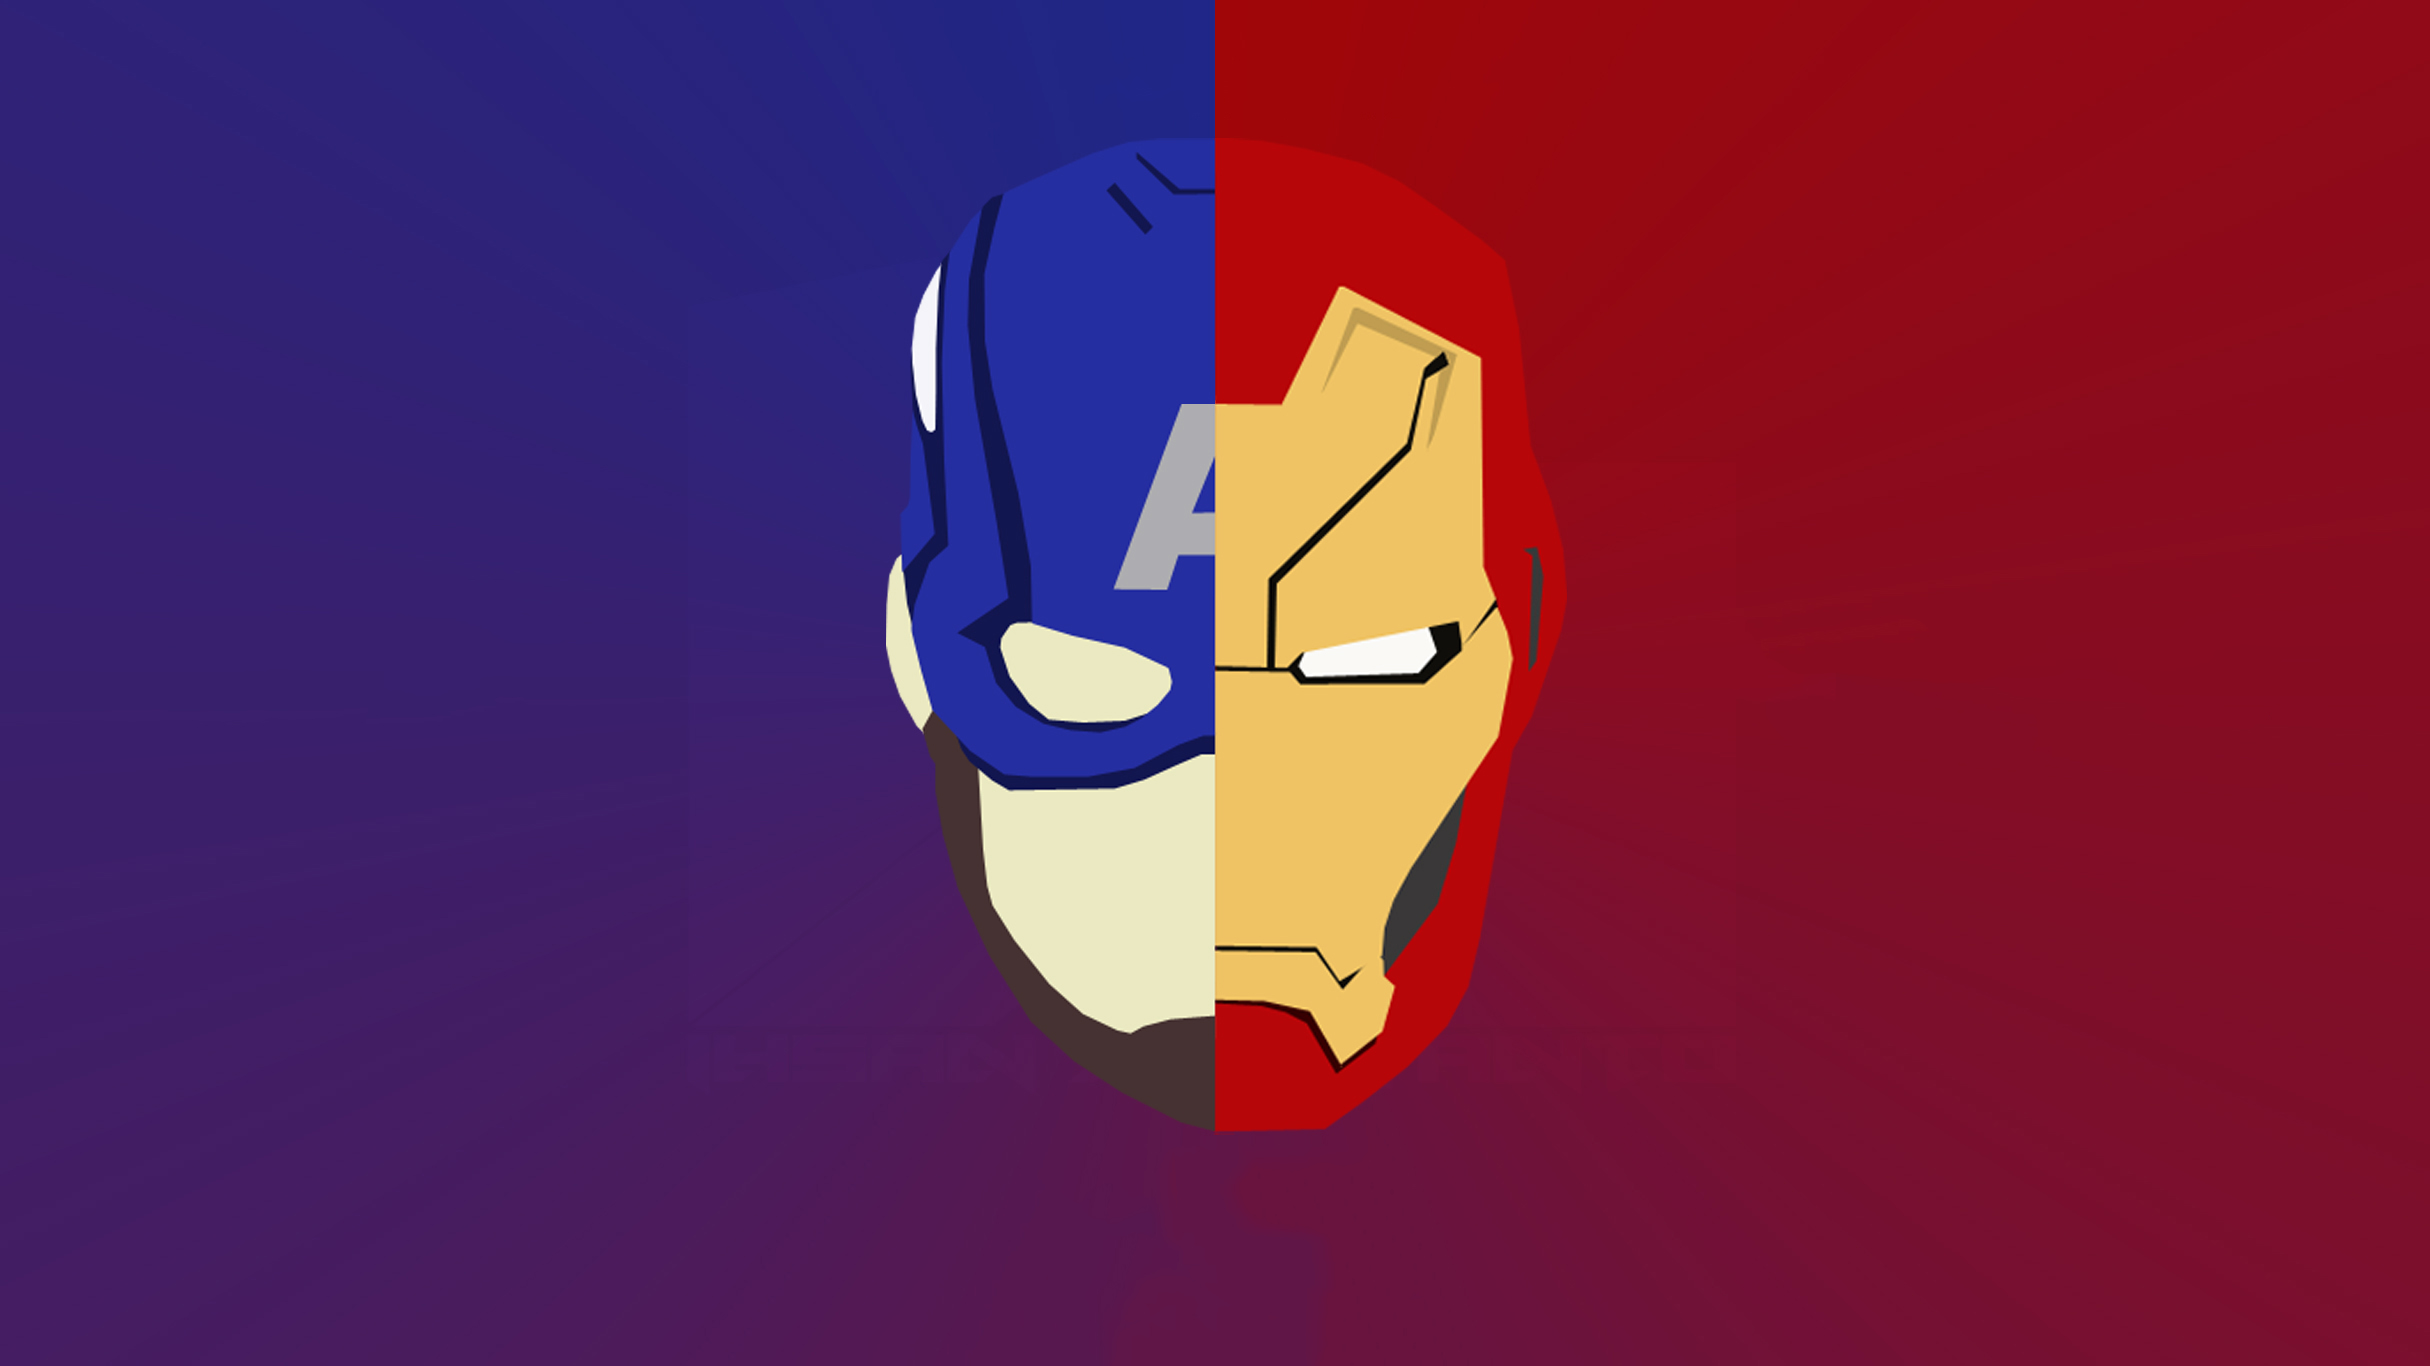 Captain America Vs Iron Man Wallpapers